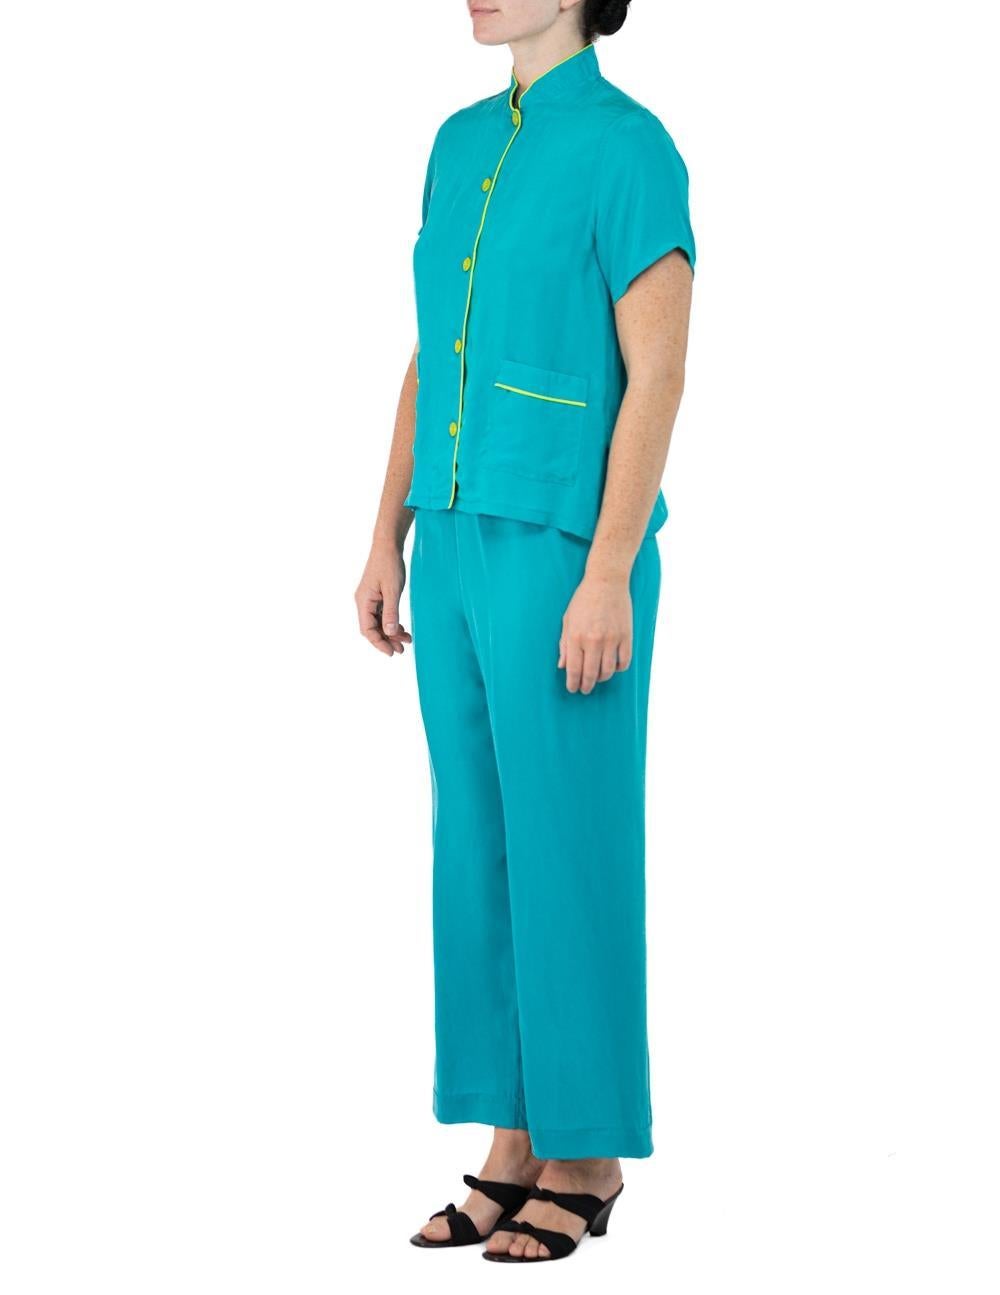 Morphew Collection Teal & Neon Yellow Trim Cold Rayon Bias Pajamas Master Medium For Sale 2